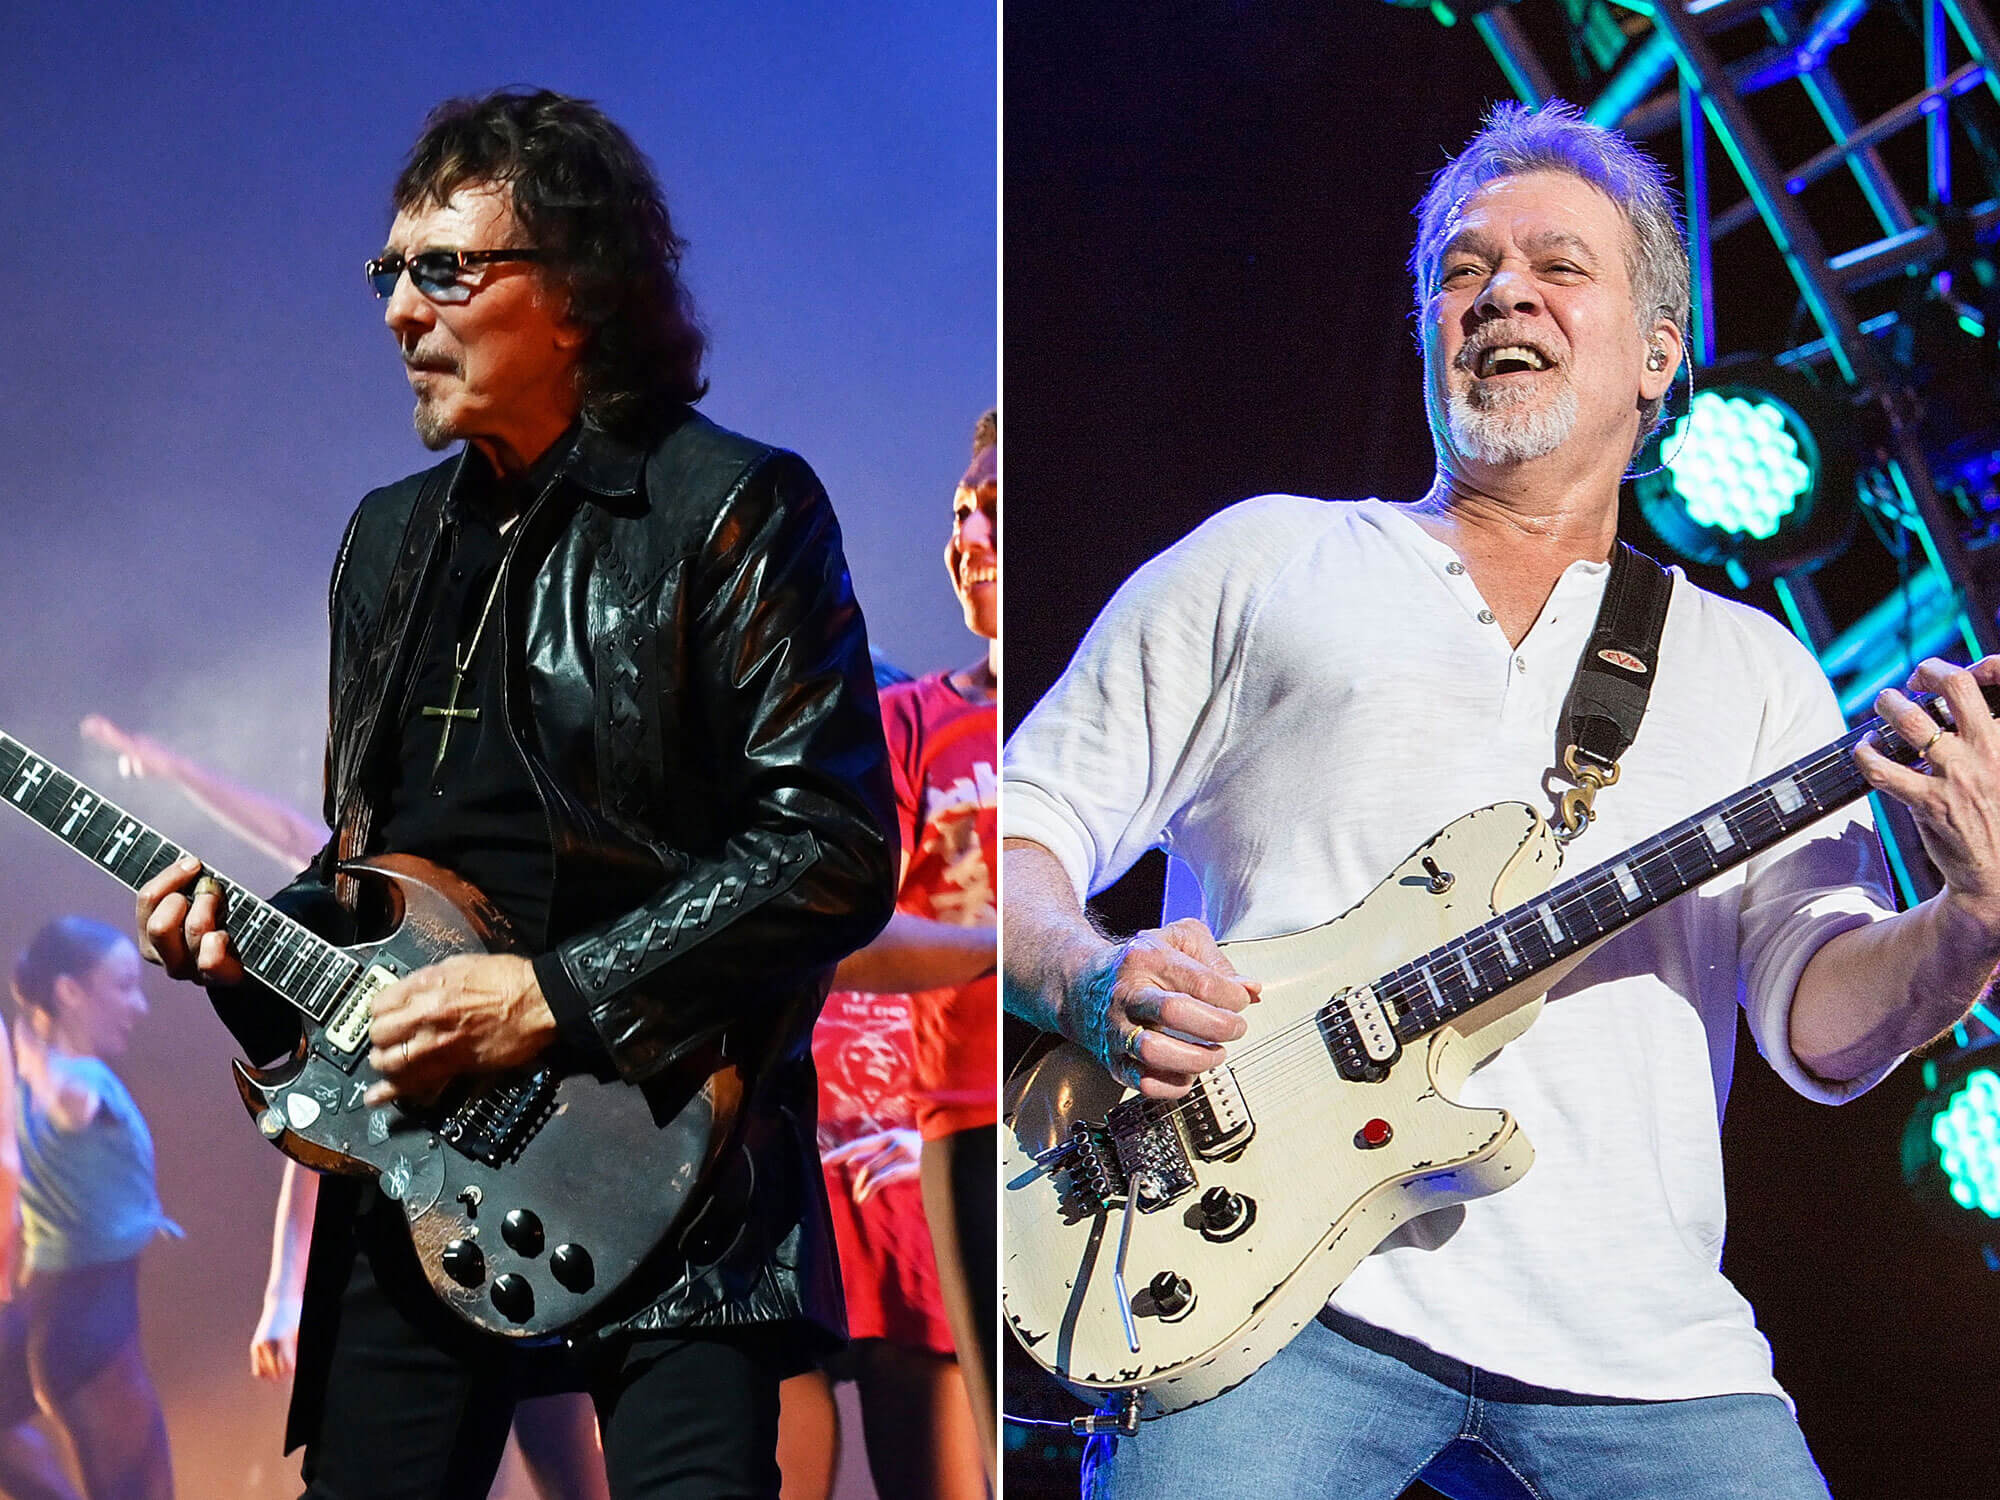 [L-R] Tony Iommi and Eddie Van Halen